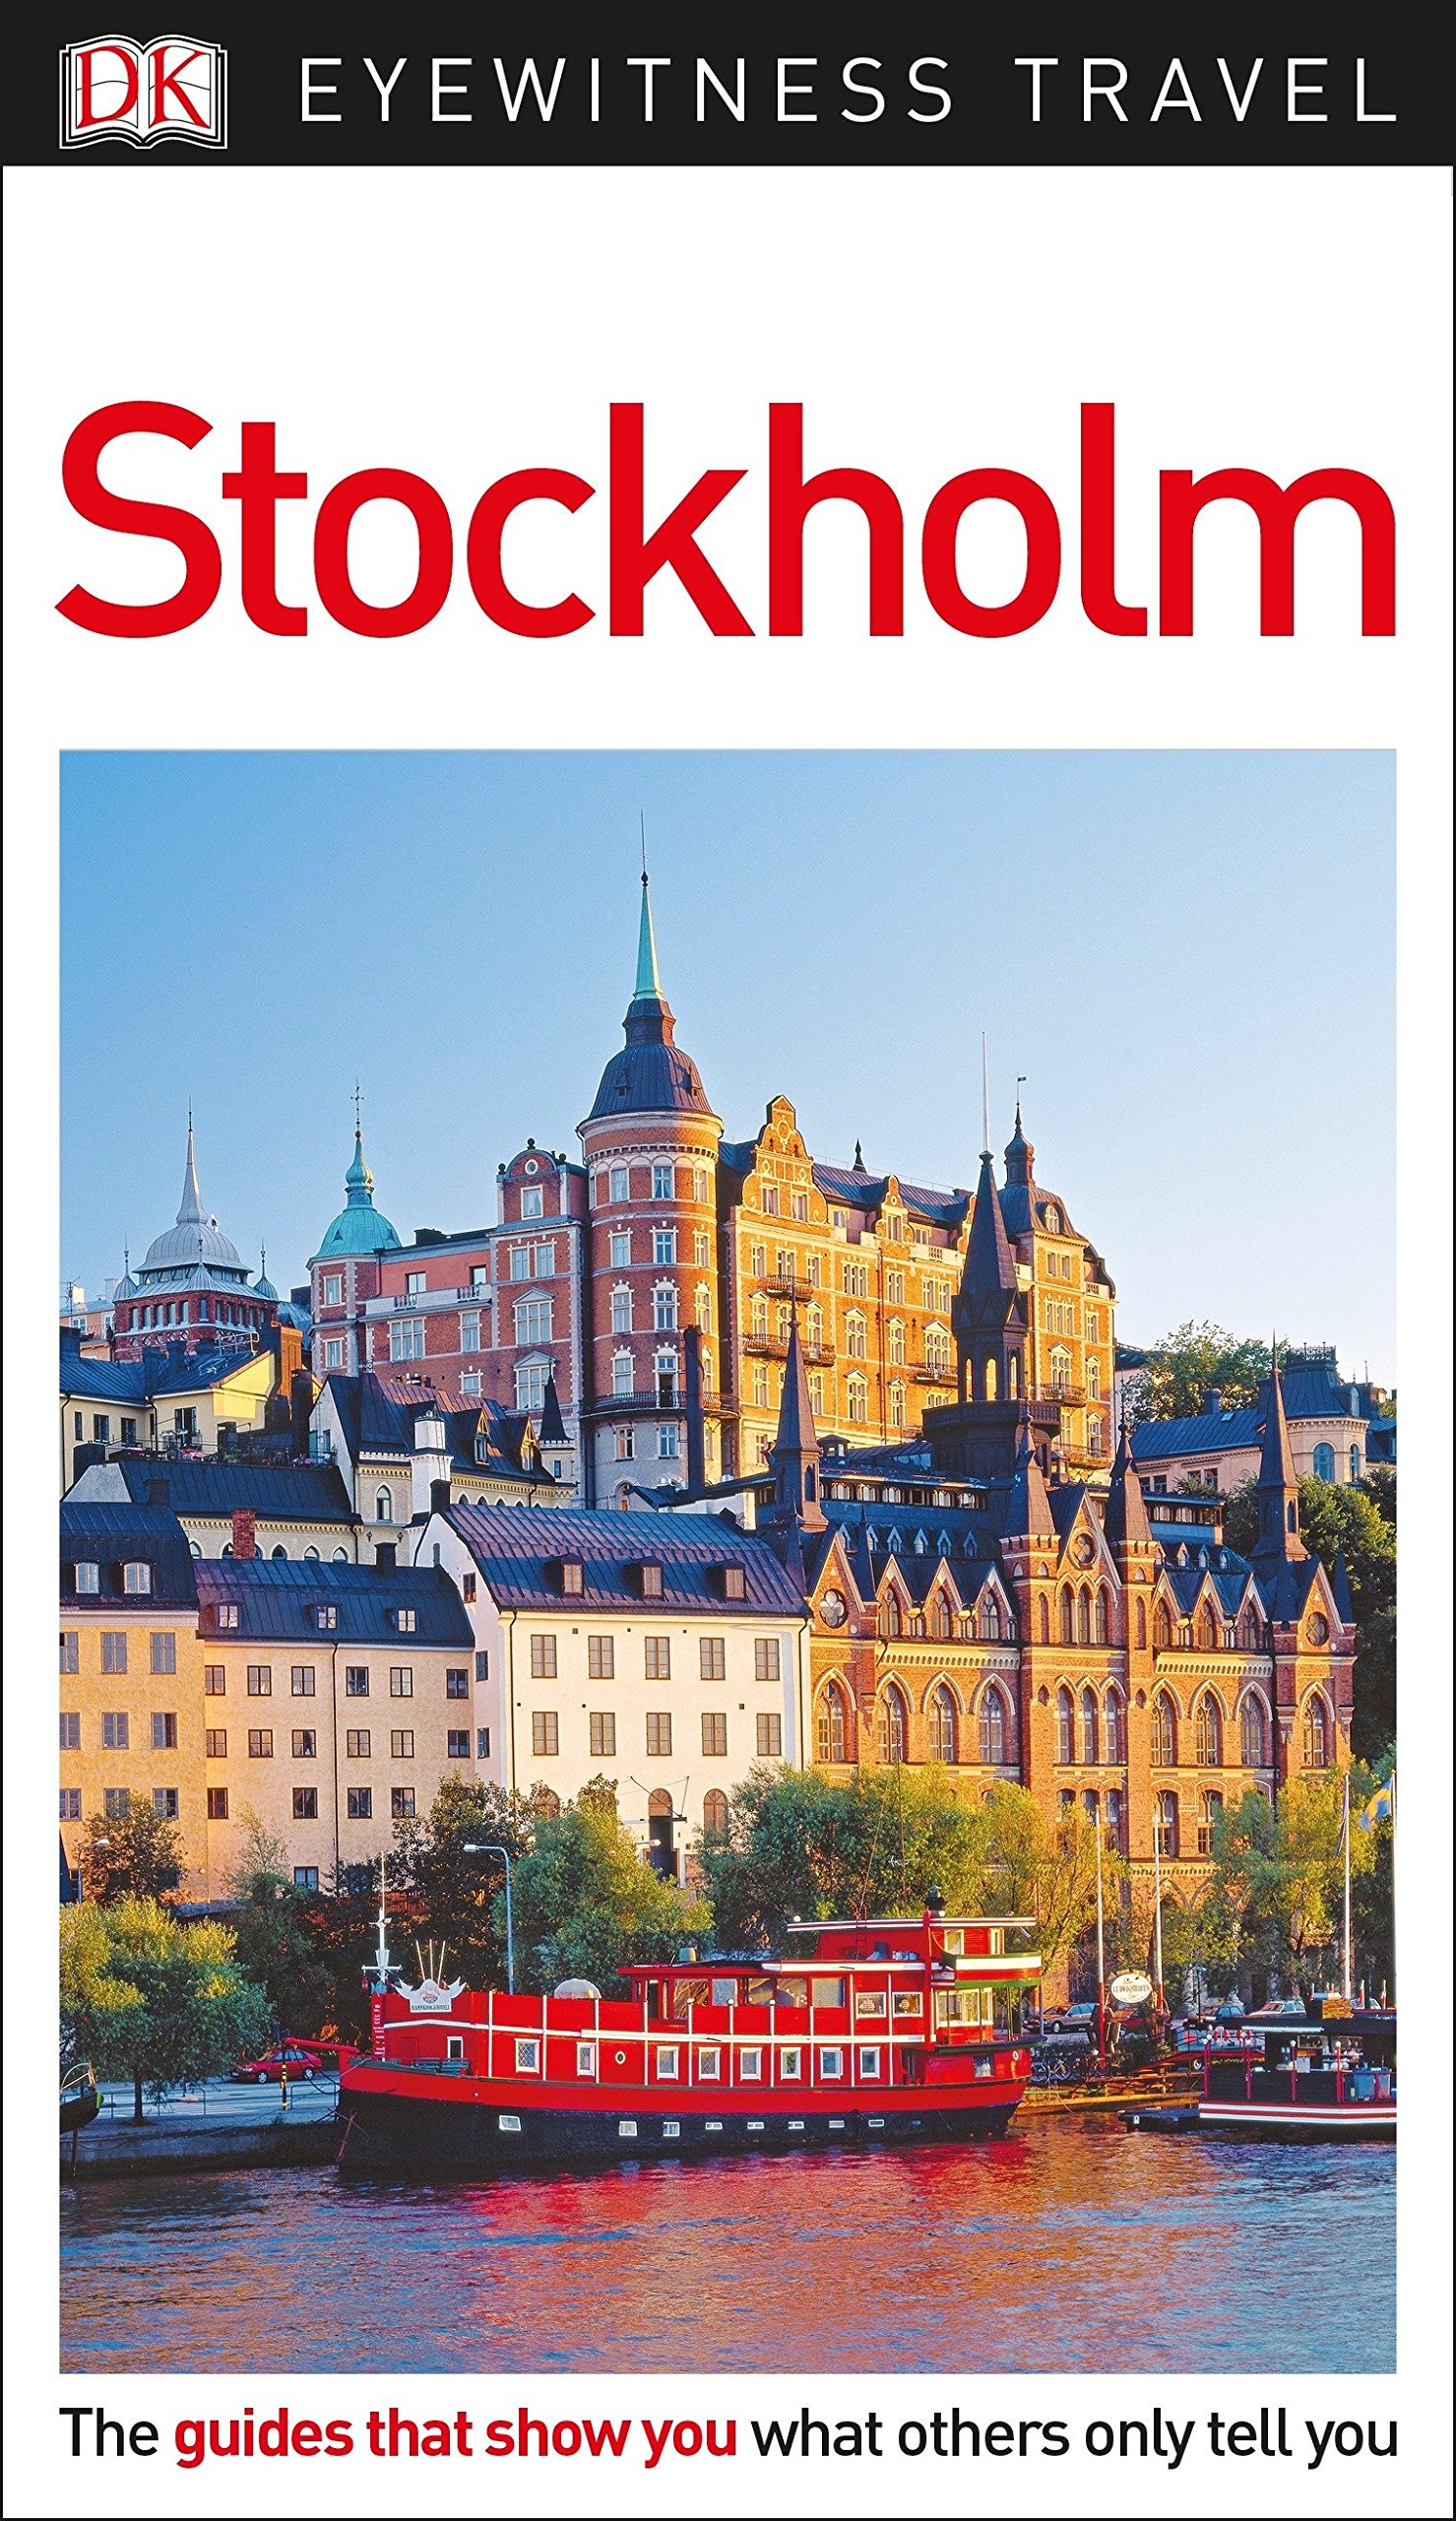 DK Eyewitness Stockholm (Travel Guide)